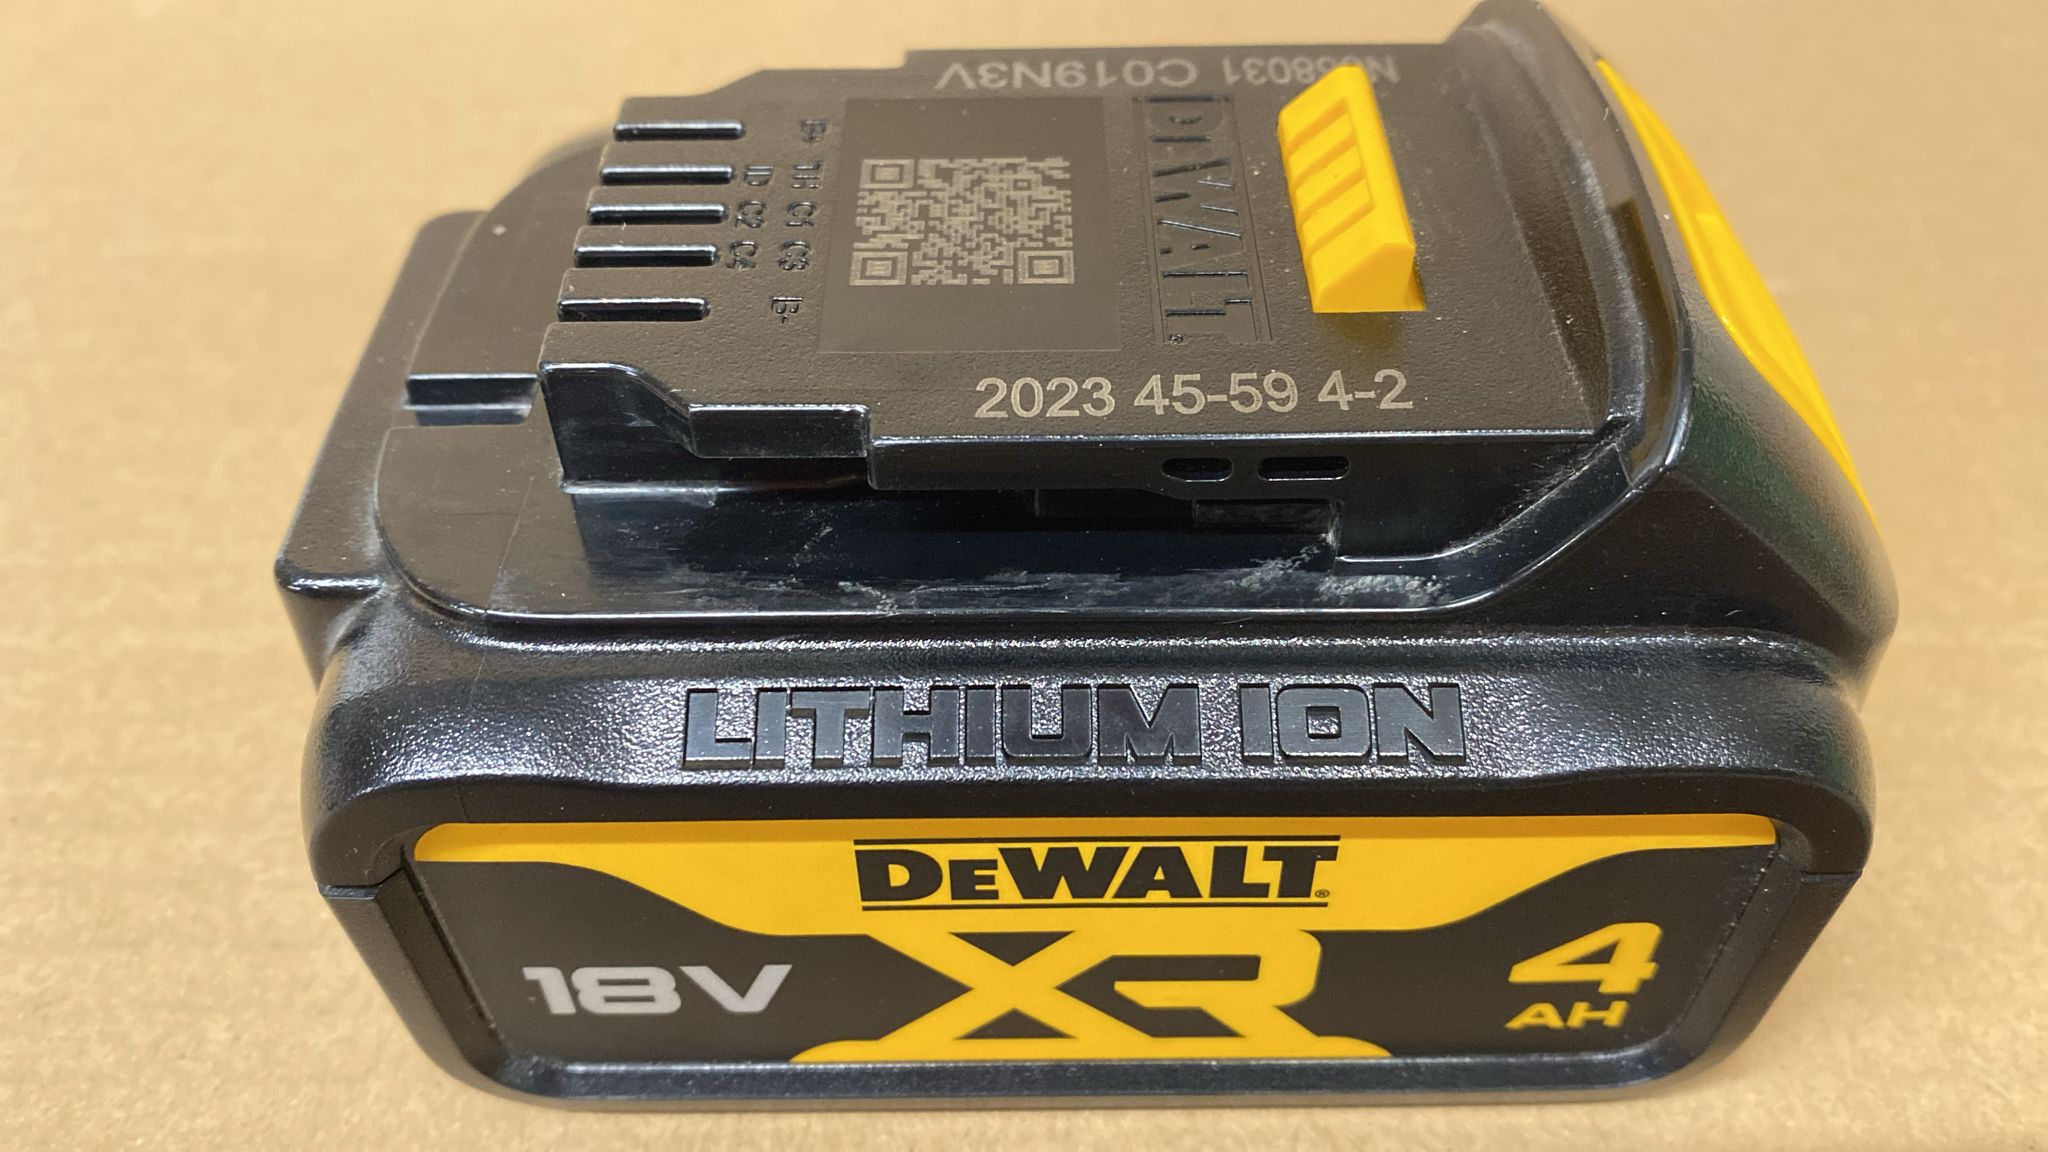 DEWALT DCB182-XJ 18V XR Lithium-Ion Battery, Black/Yellow, 4.0Ah 2782